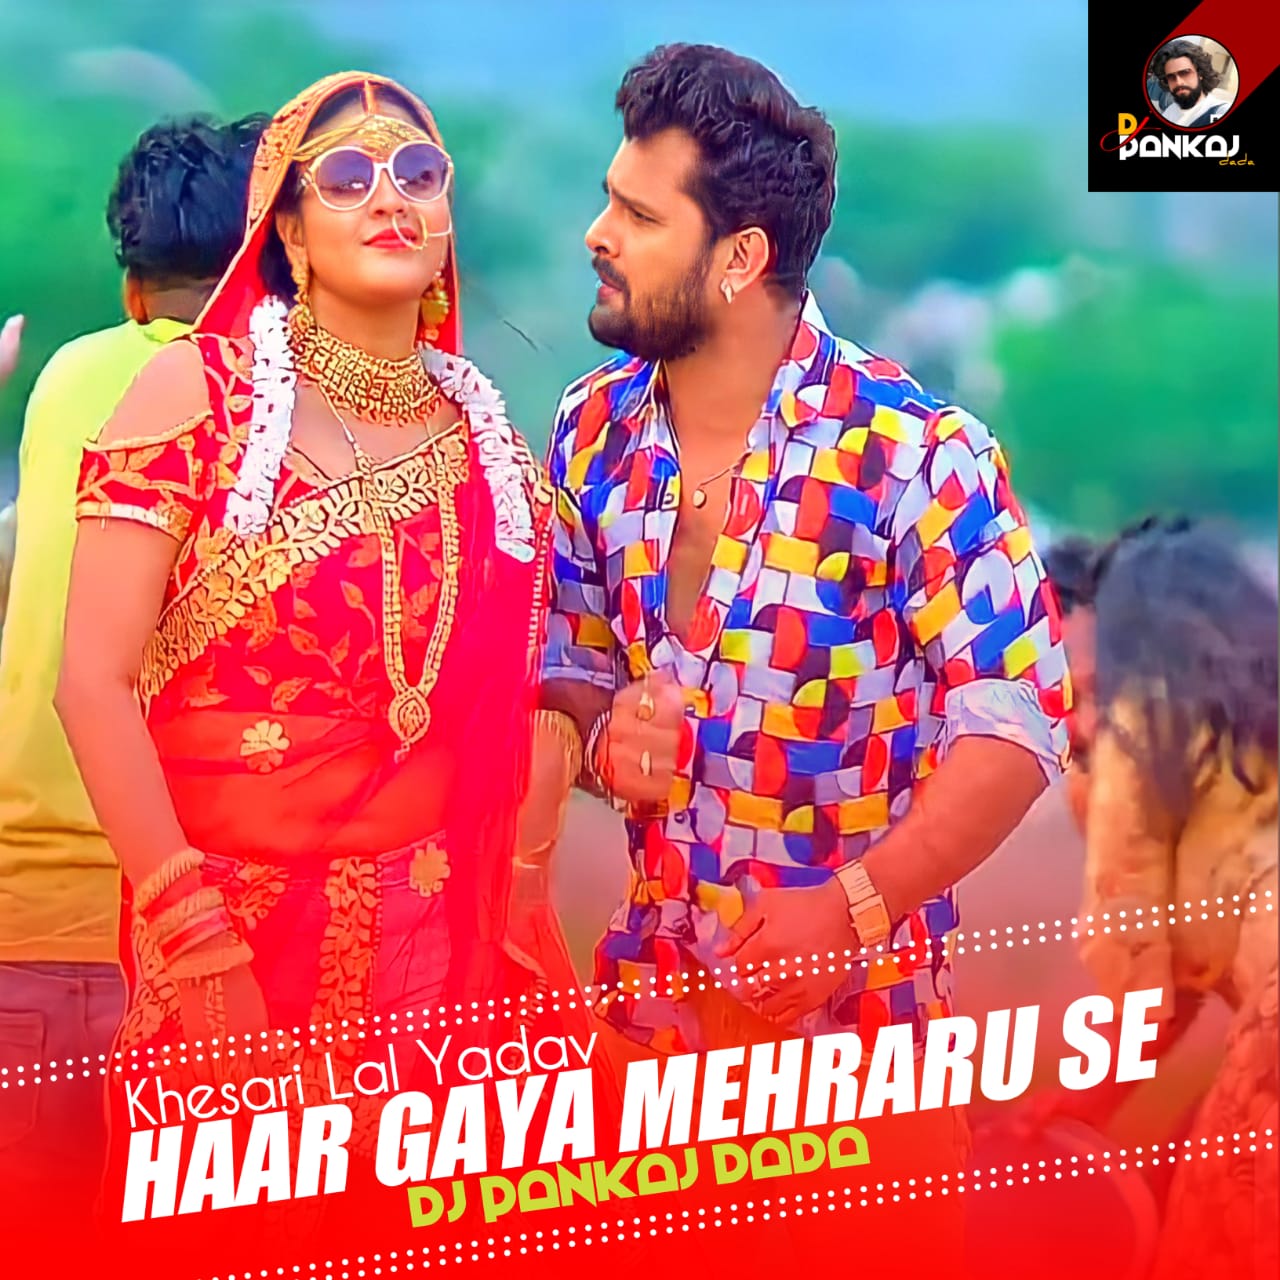 Haar Gaya Mehraru Se - Khesari Lal Yadav - (Bhojpuri Gms Jhankar Remix Song) - Dj Pankaj Dada Tanda